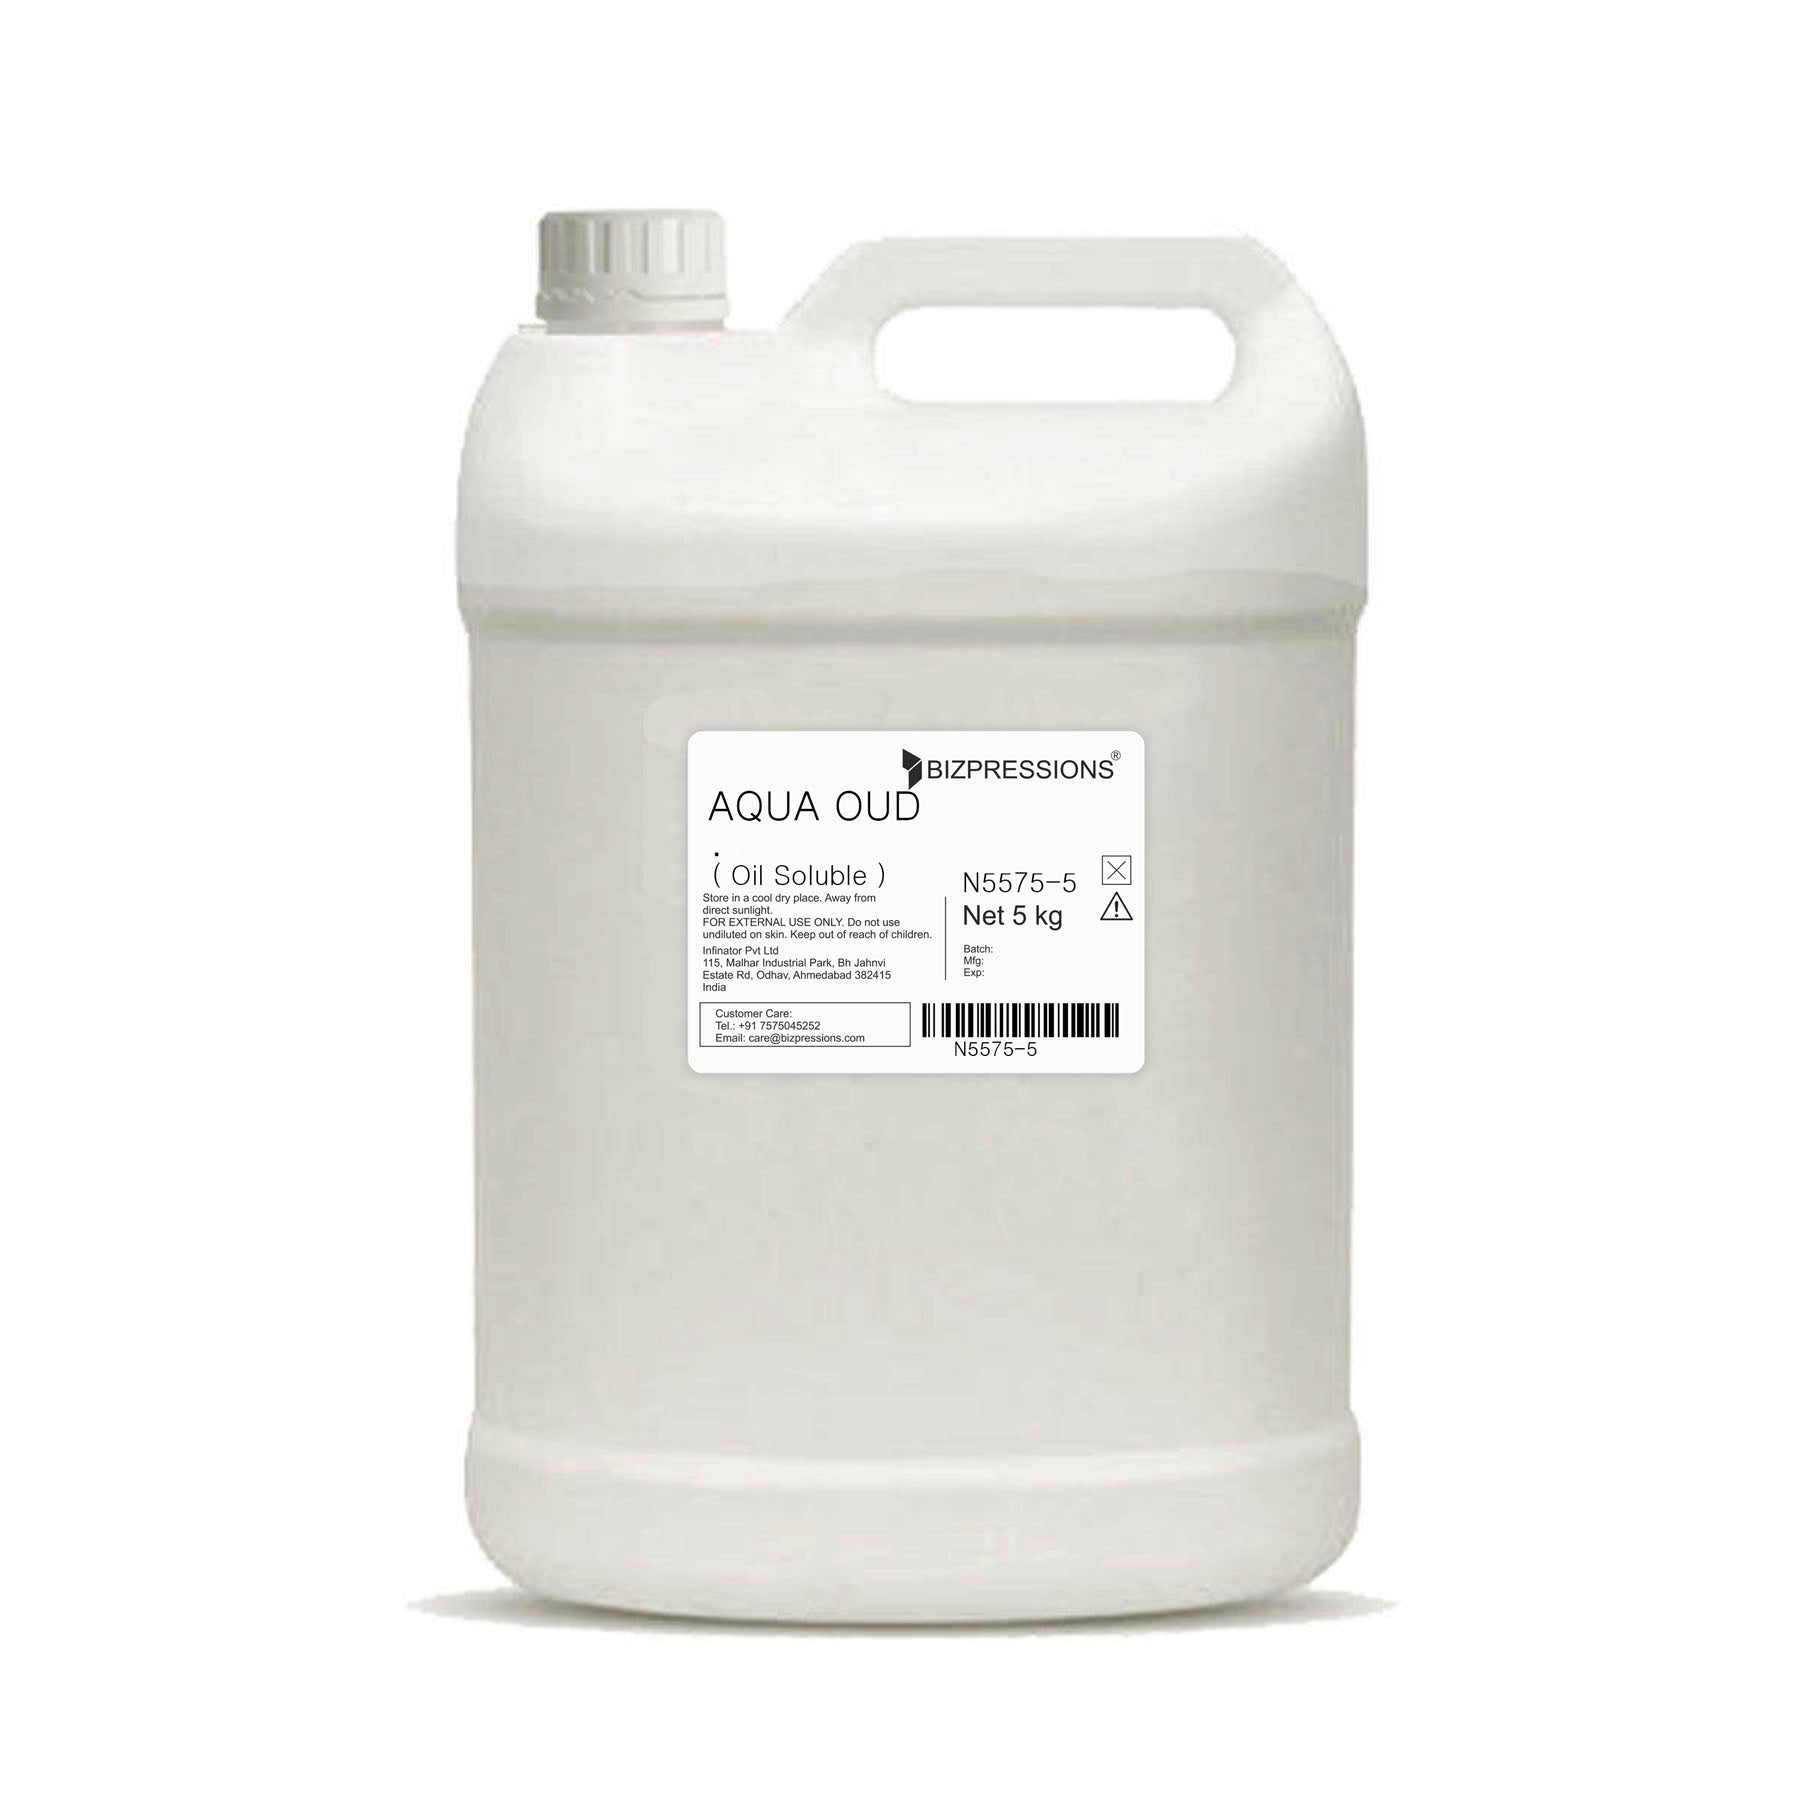 AQUA OUD - Fragrance ( Oil Soluble ) - 5 kg